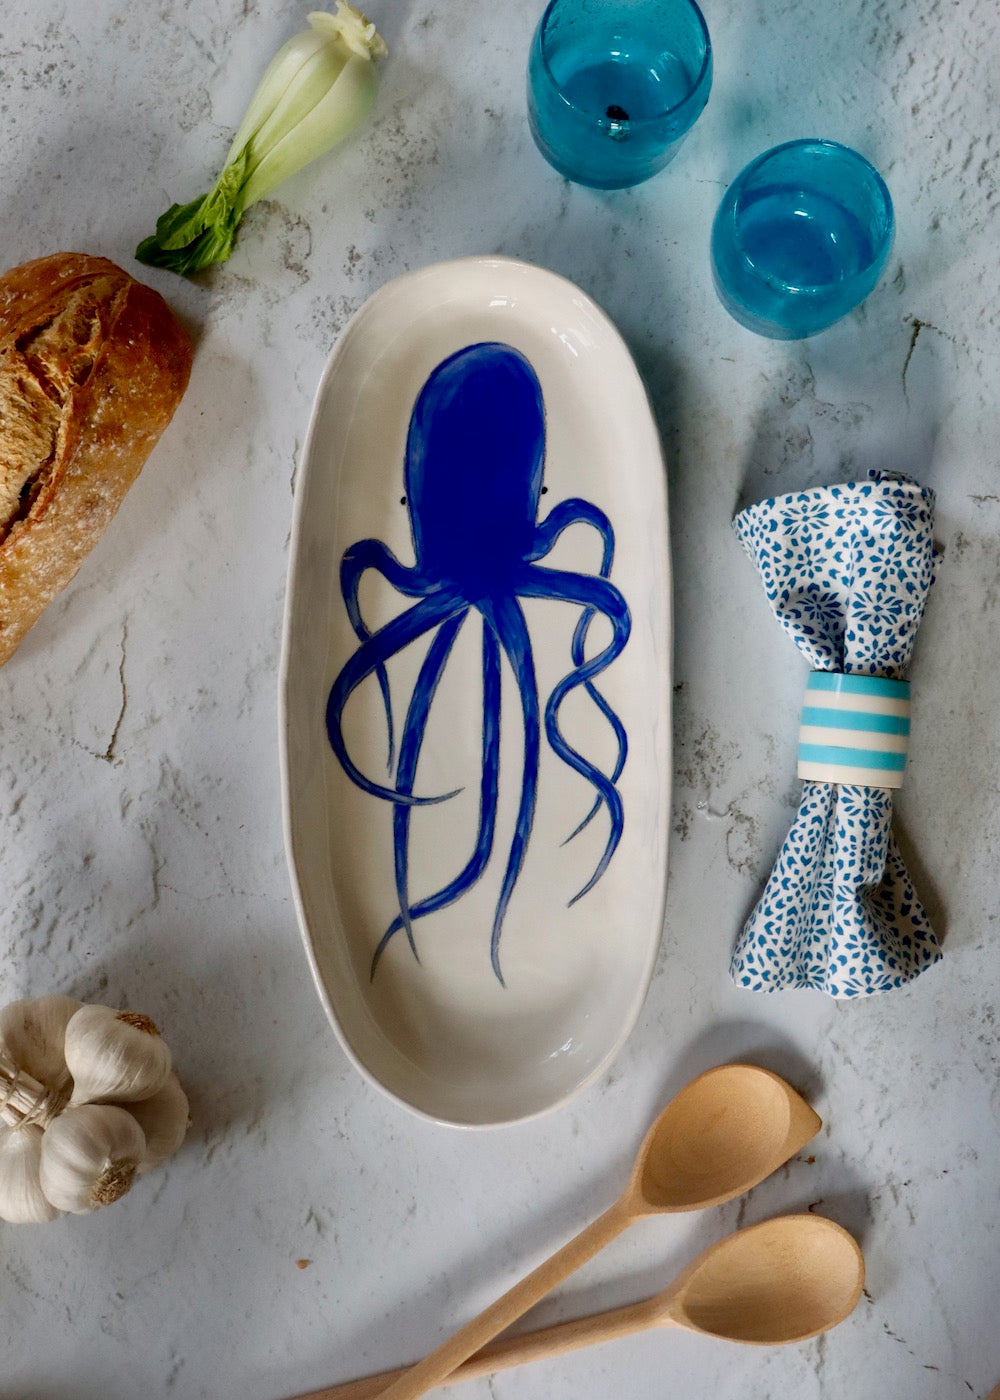 Large Serving Platter - Sea Blue Octopus on White Background